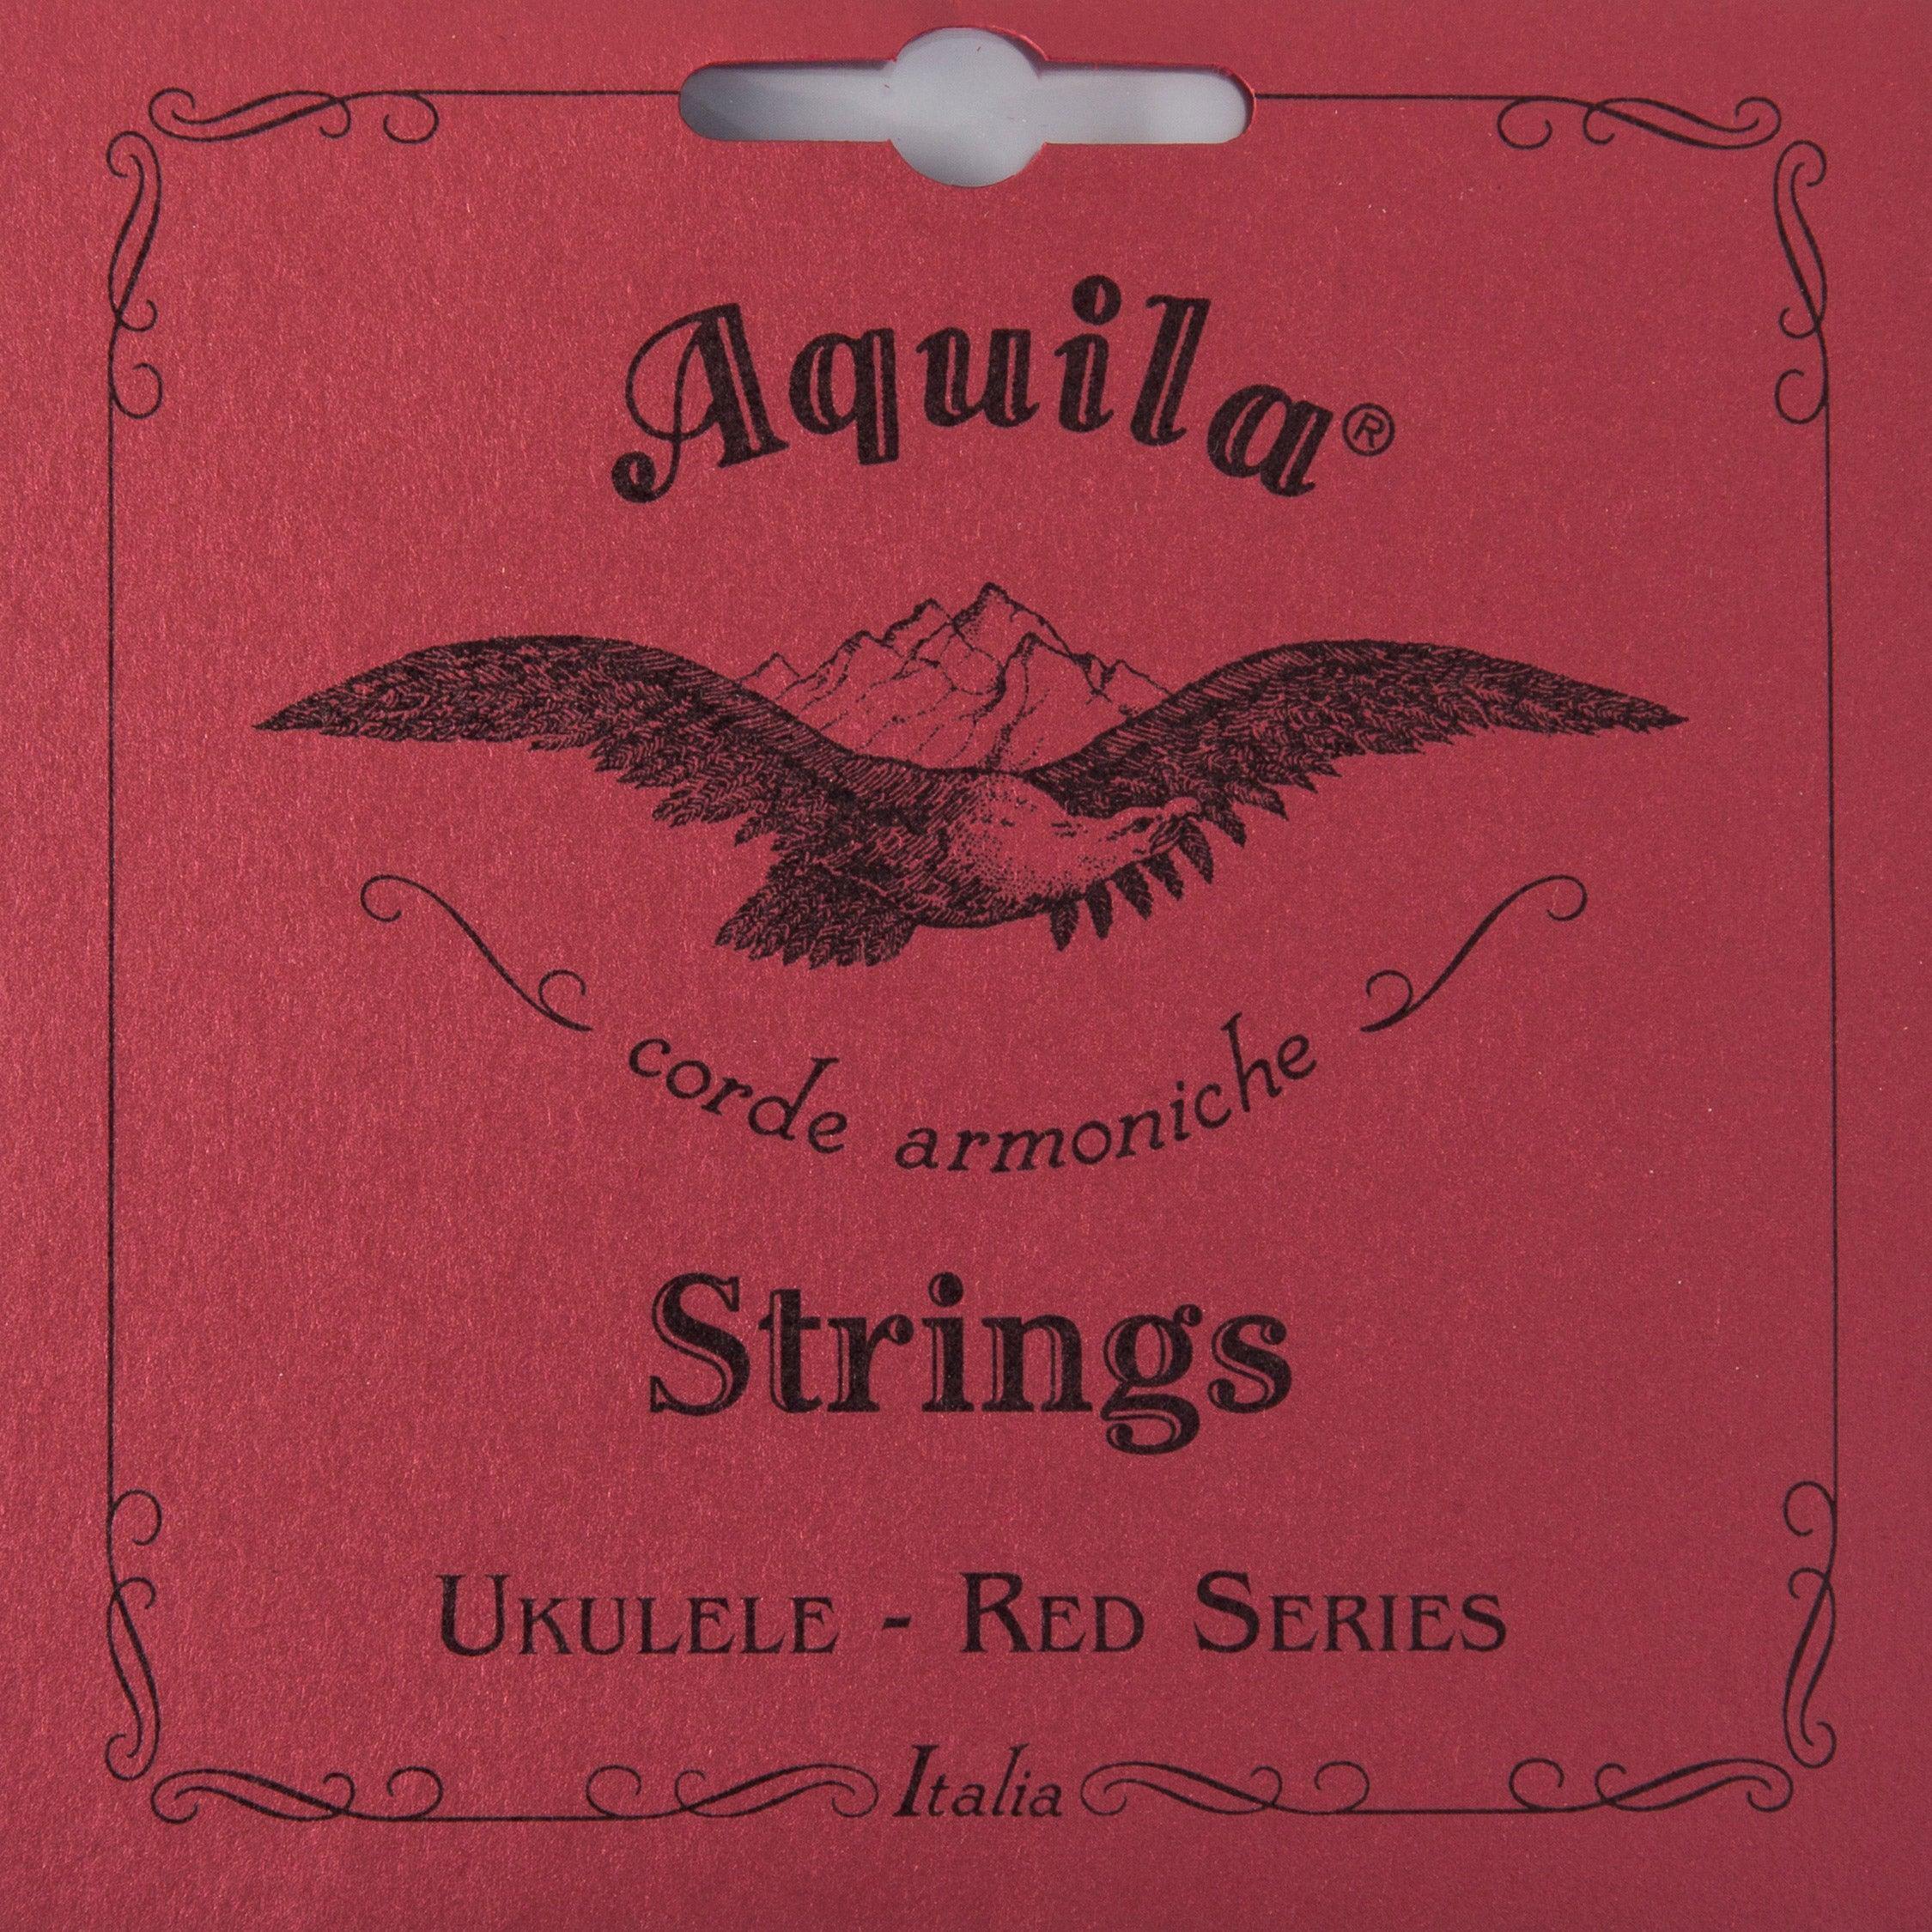 Aquila - Reds Tenor Low G Ukulele Strings - Strings - Ukulele by Aquila at Muso's Stuff